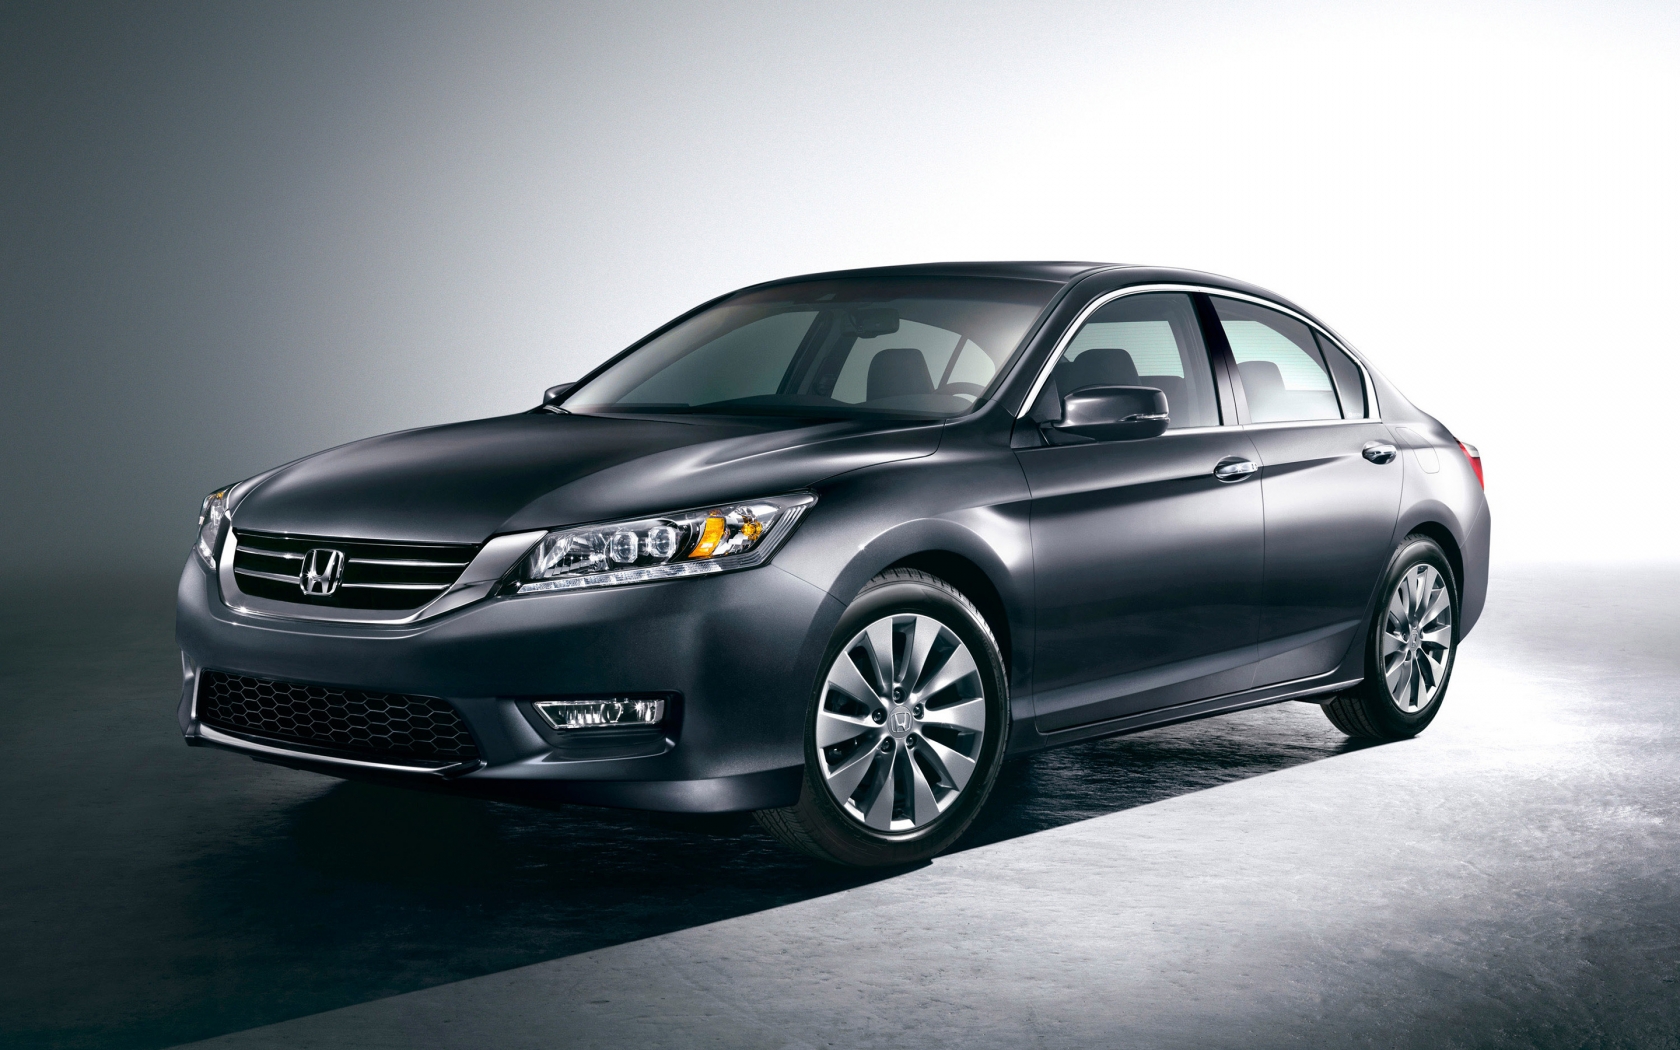 2013 Honda Accord for 1680 x 1050 widescreen resolution